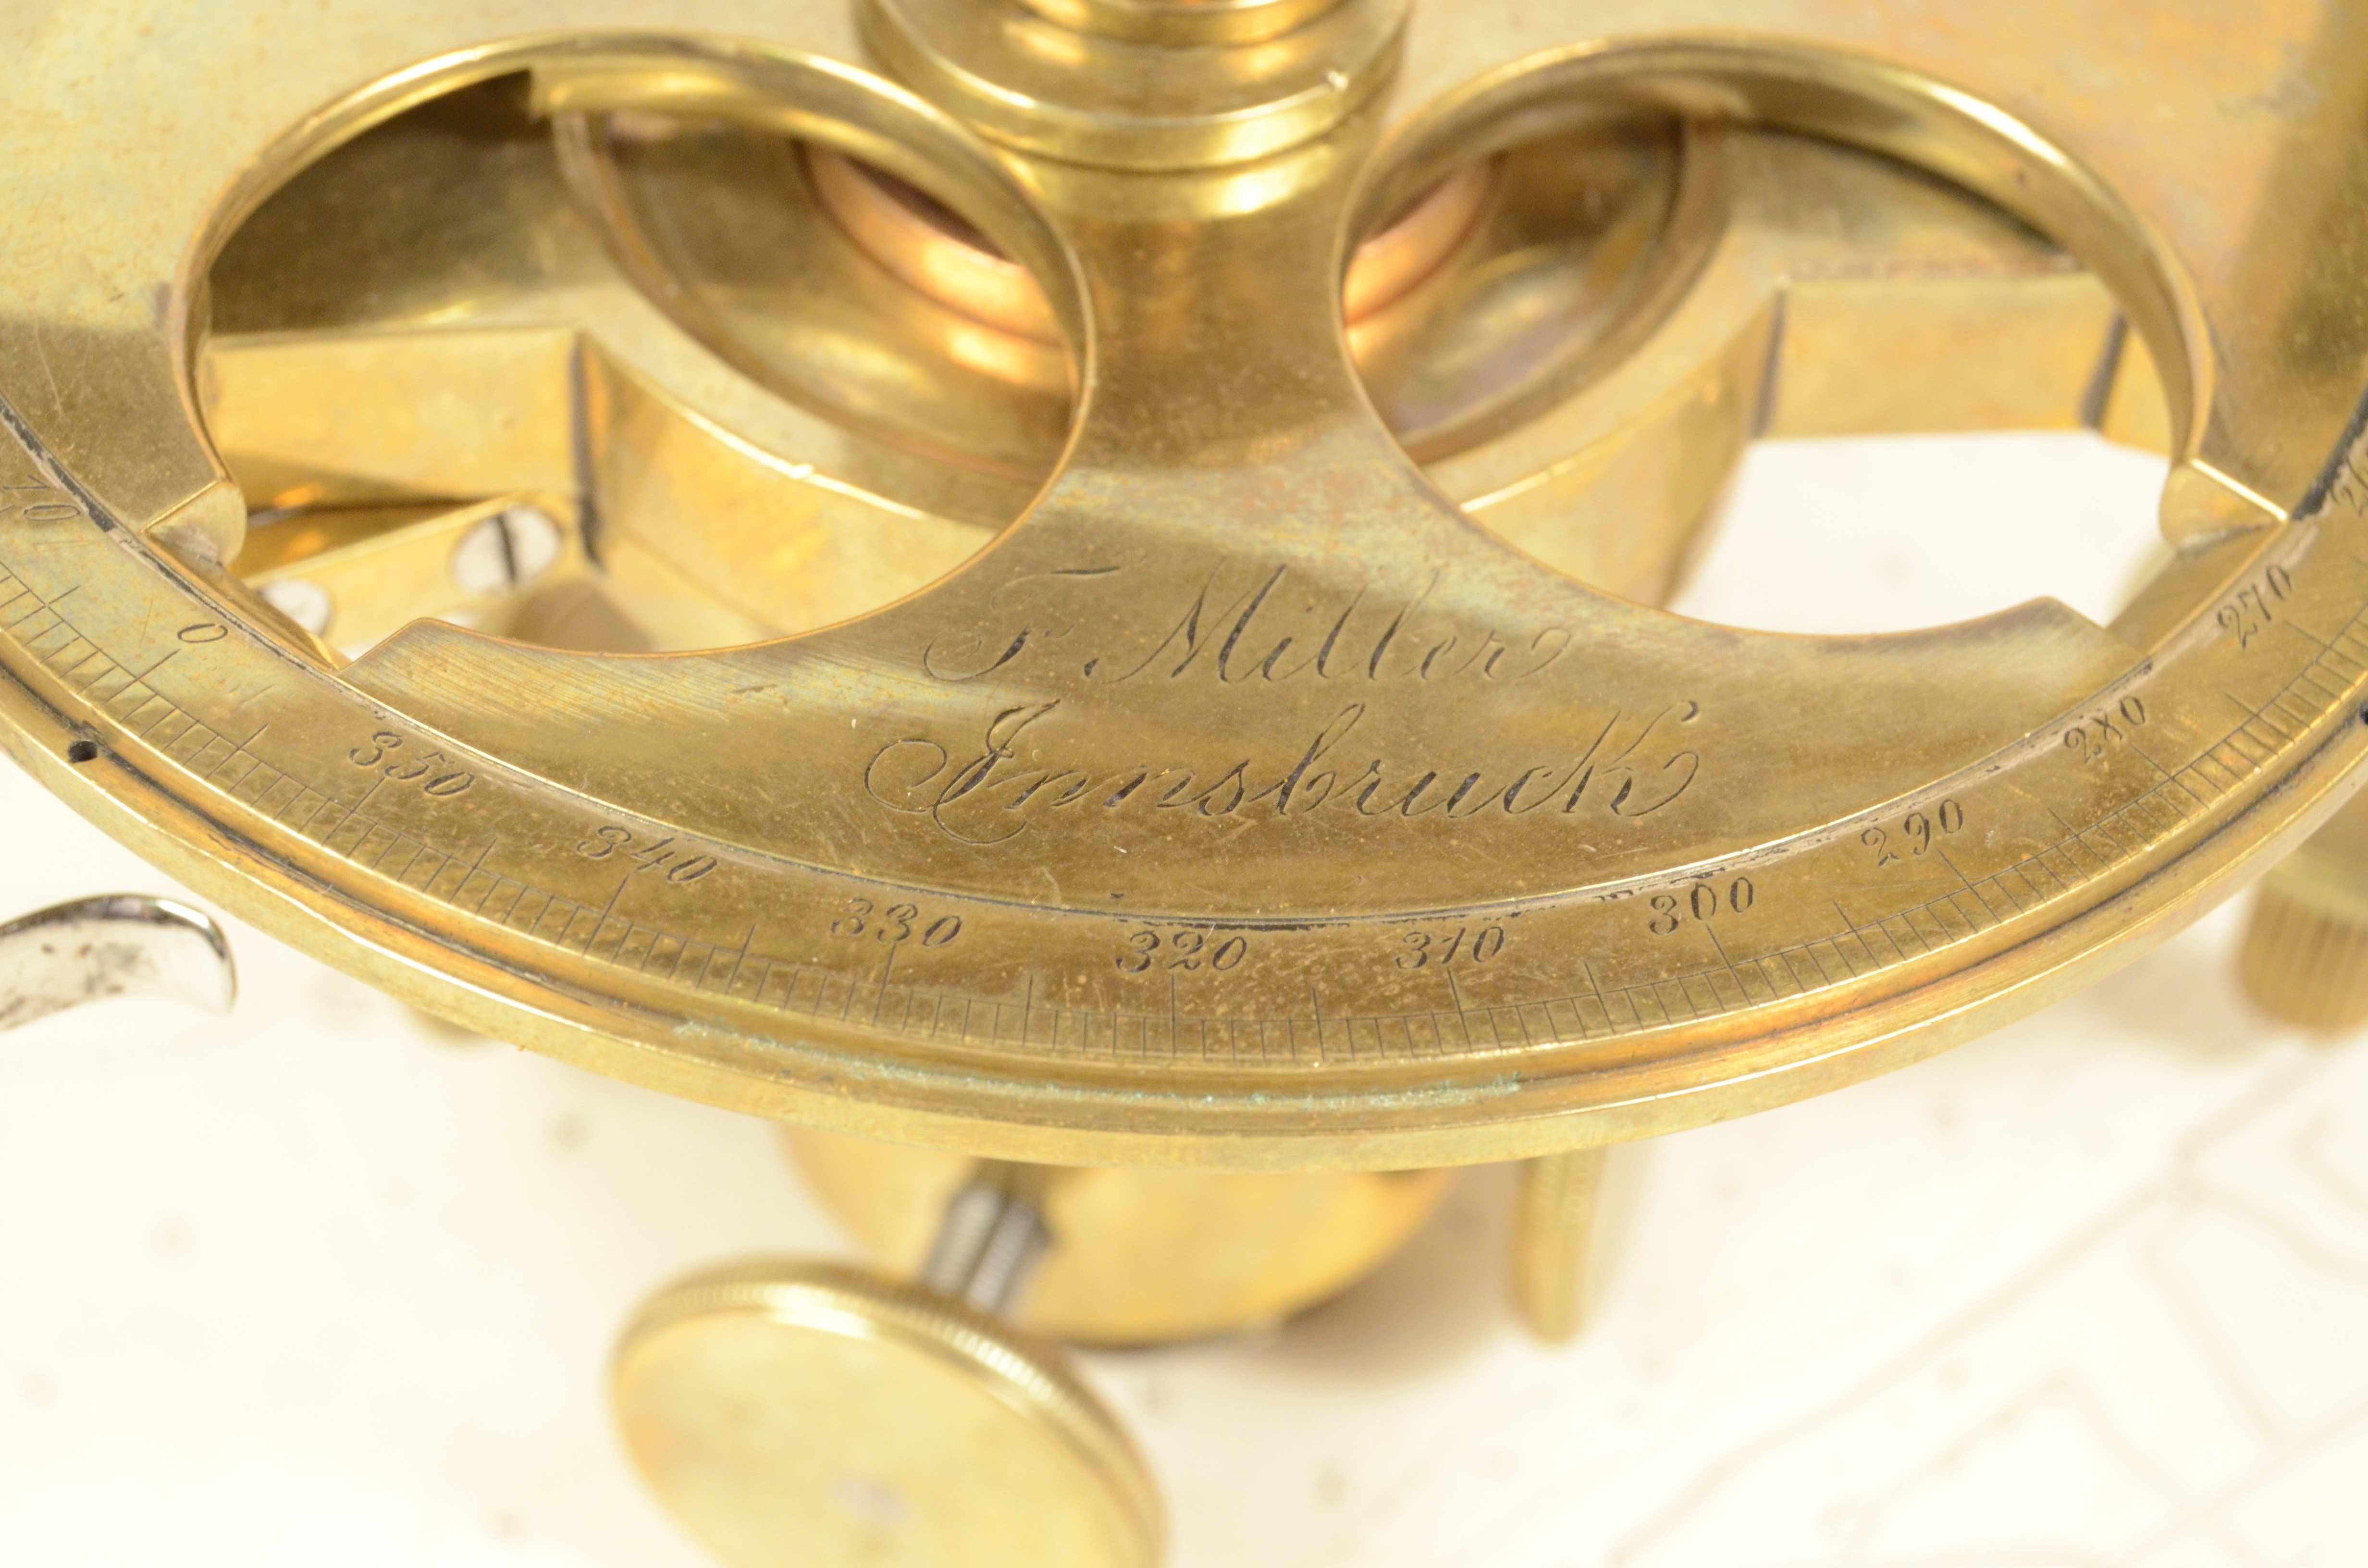 1870s Brass Clisigonimeter F. Miller Innsbruck Surveyor Measurement Instrumemt 5